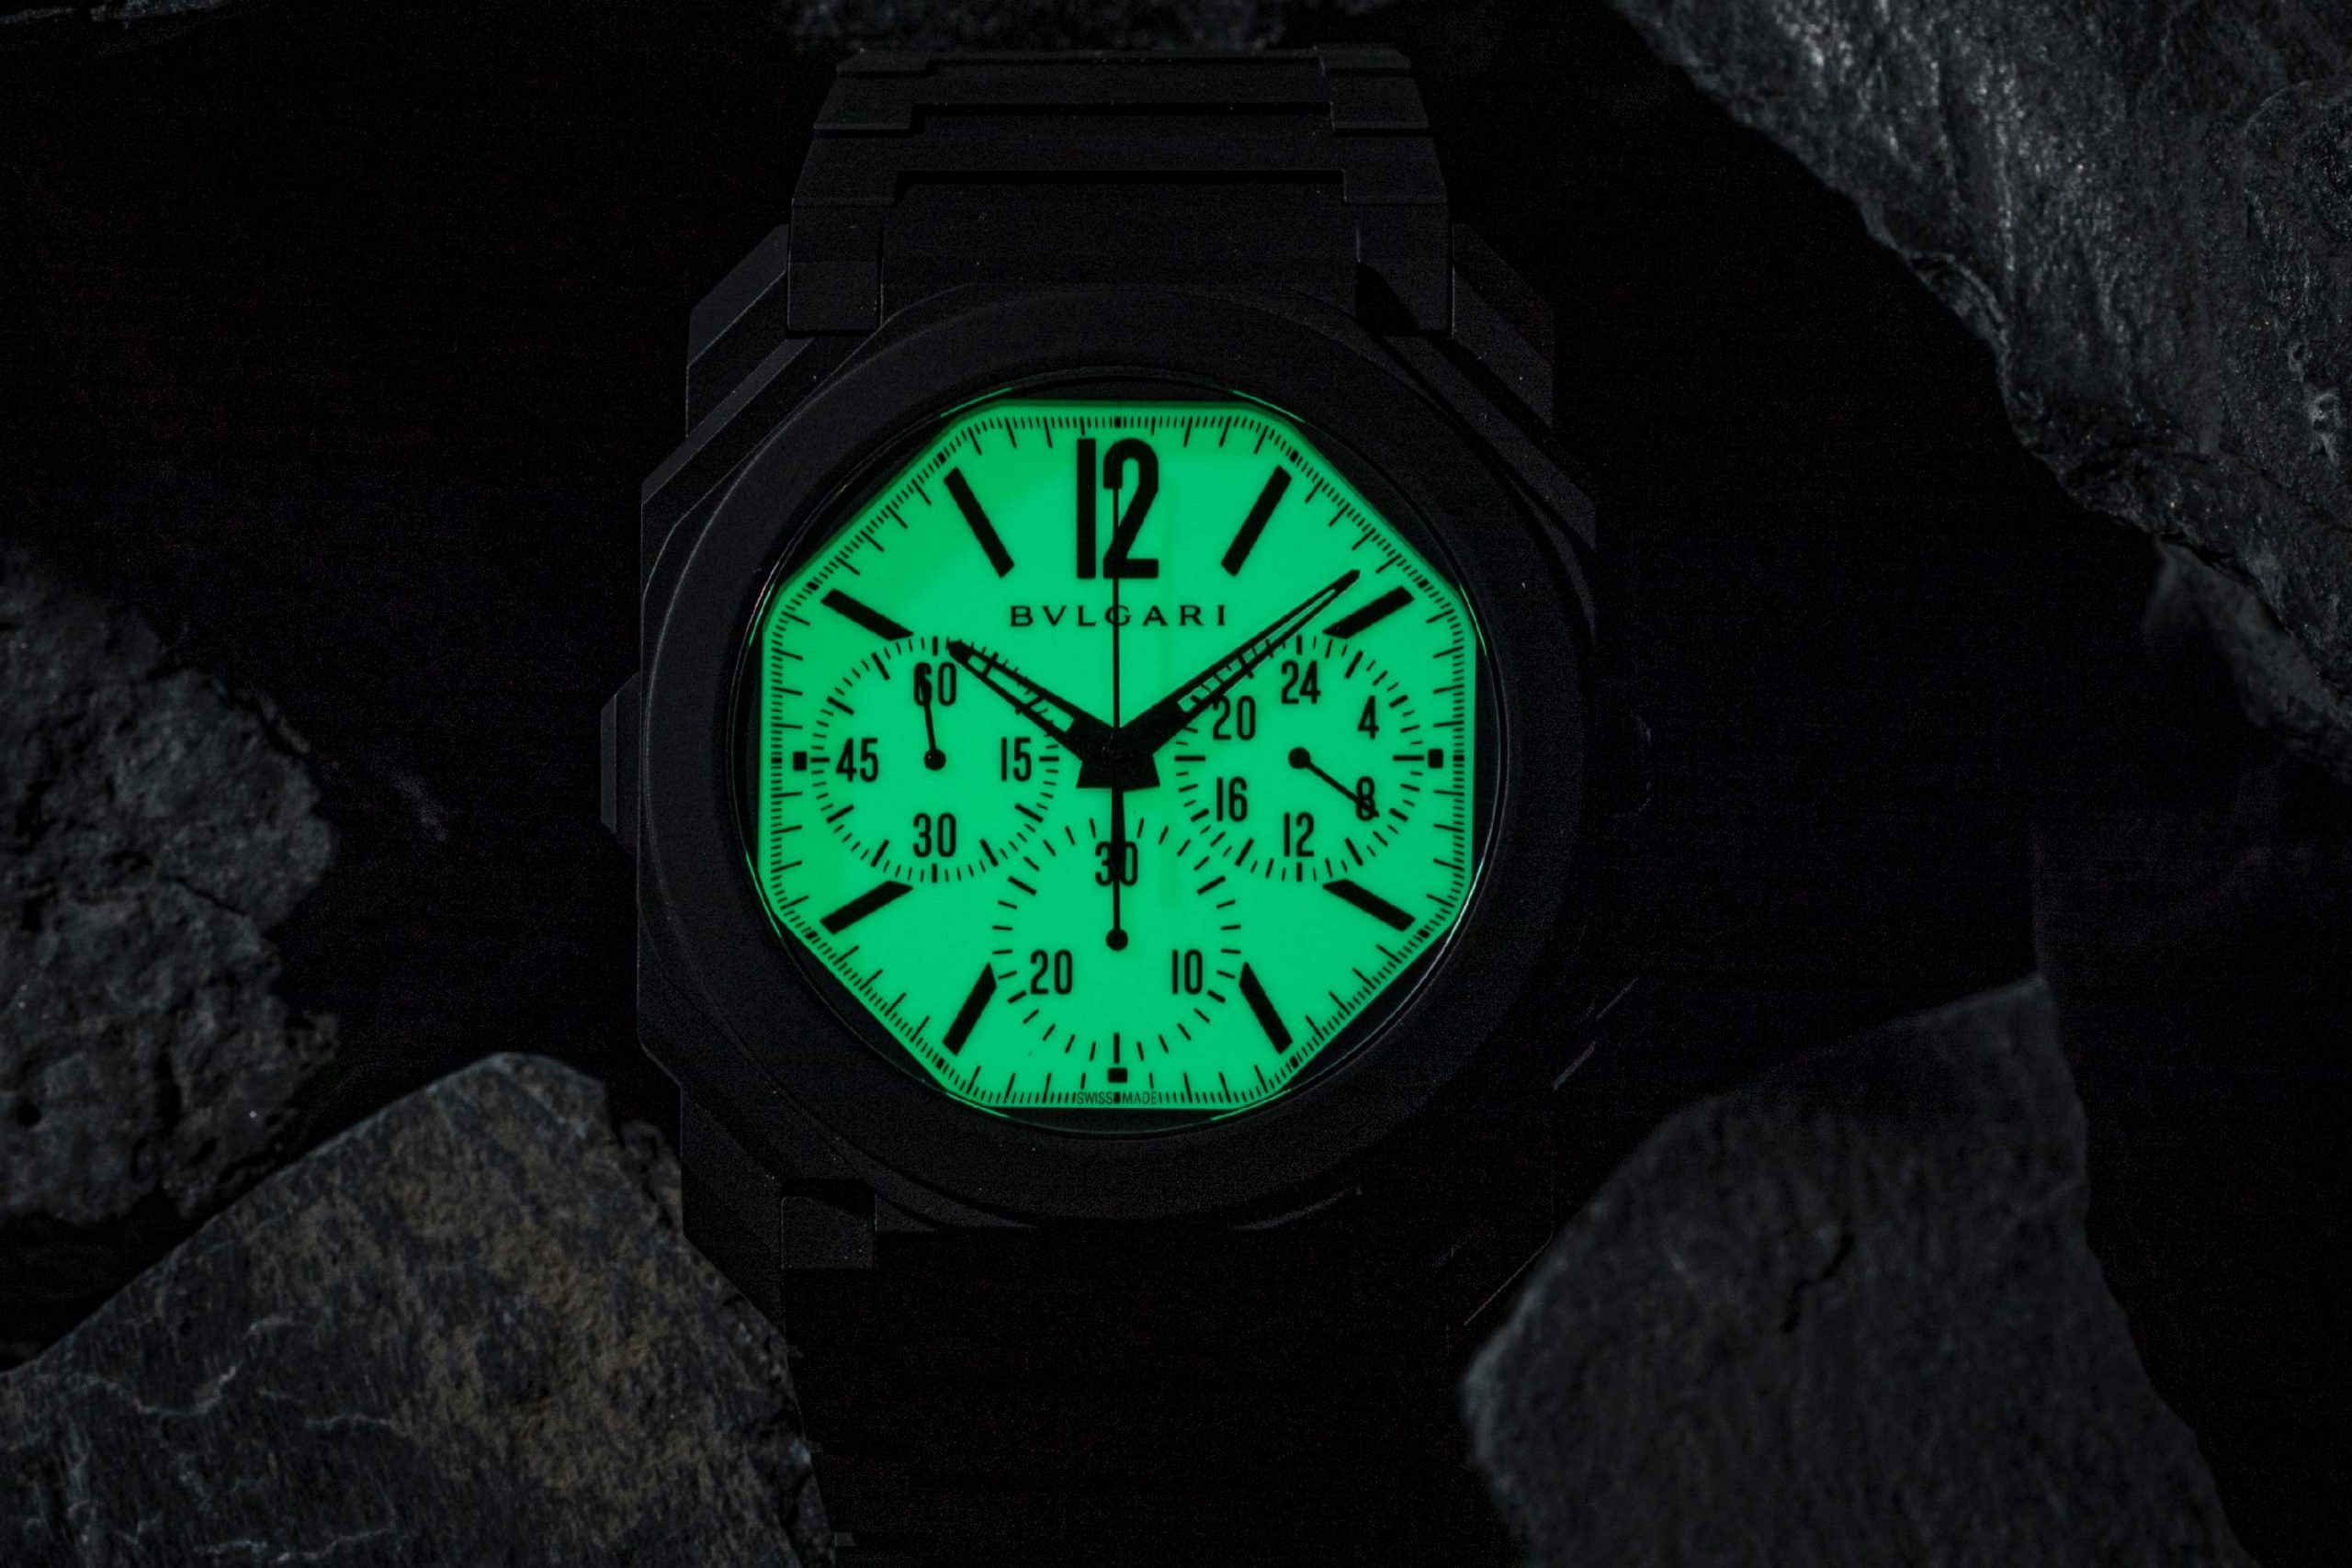 Introducing Bvlgari Octo Finissimo Ceramic Chronograph GMT “Nuclear Option” for Revolution & The Rake (© Revolution)